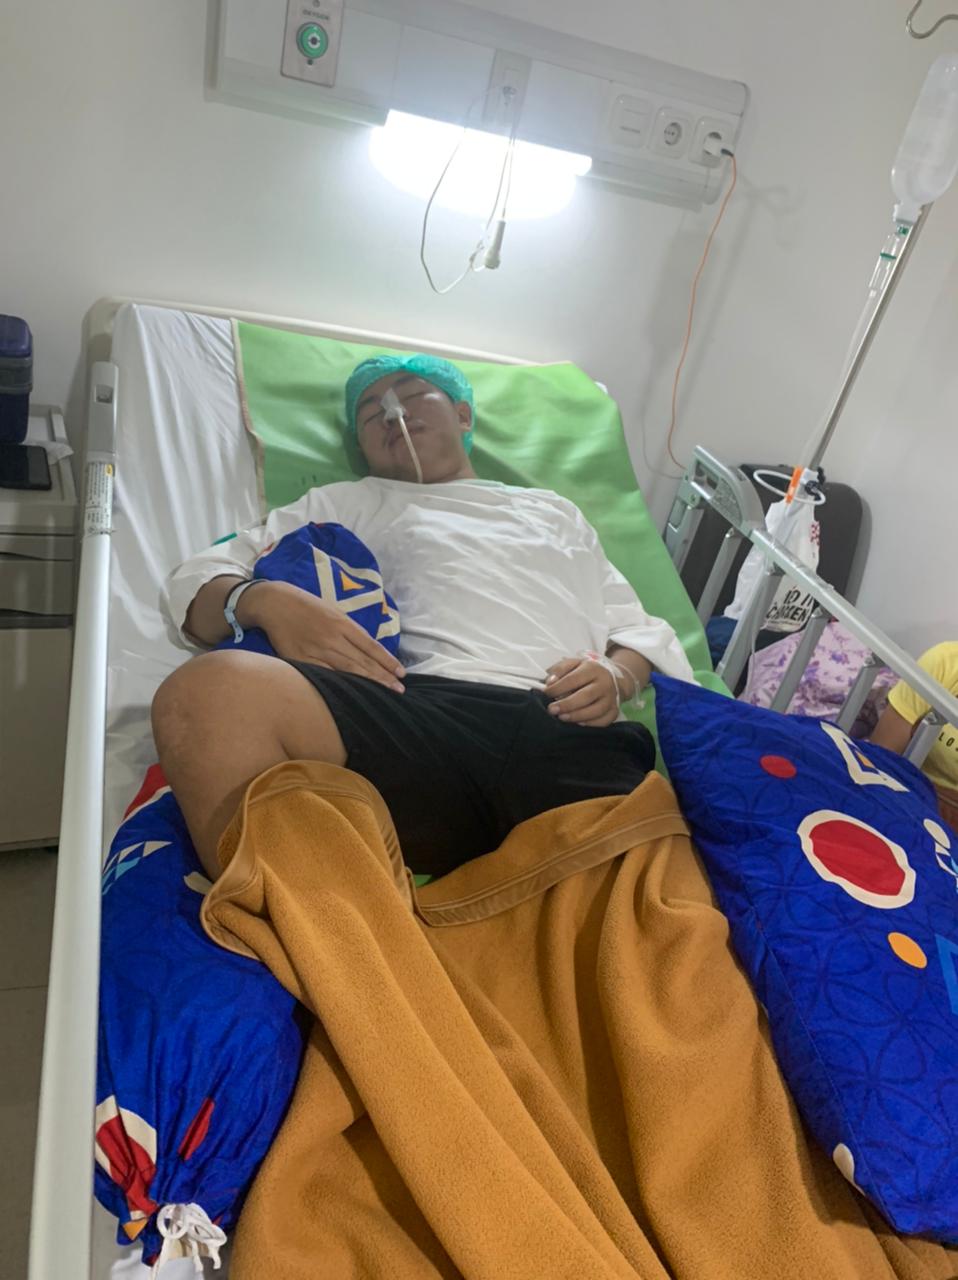 Pelajar Dikeroyok Jalani 7 Jam Operasi di Rumah Sakit, Sudah 2 Pekan Pelakunya Belum Tertangkap